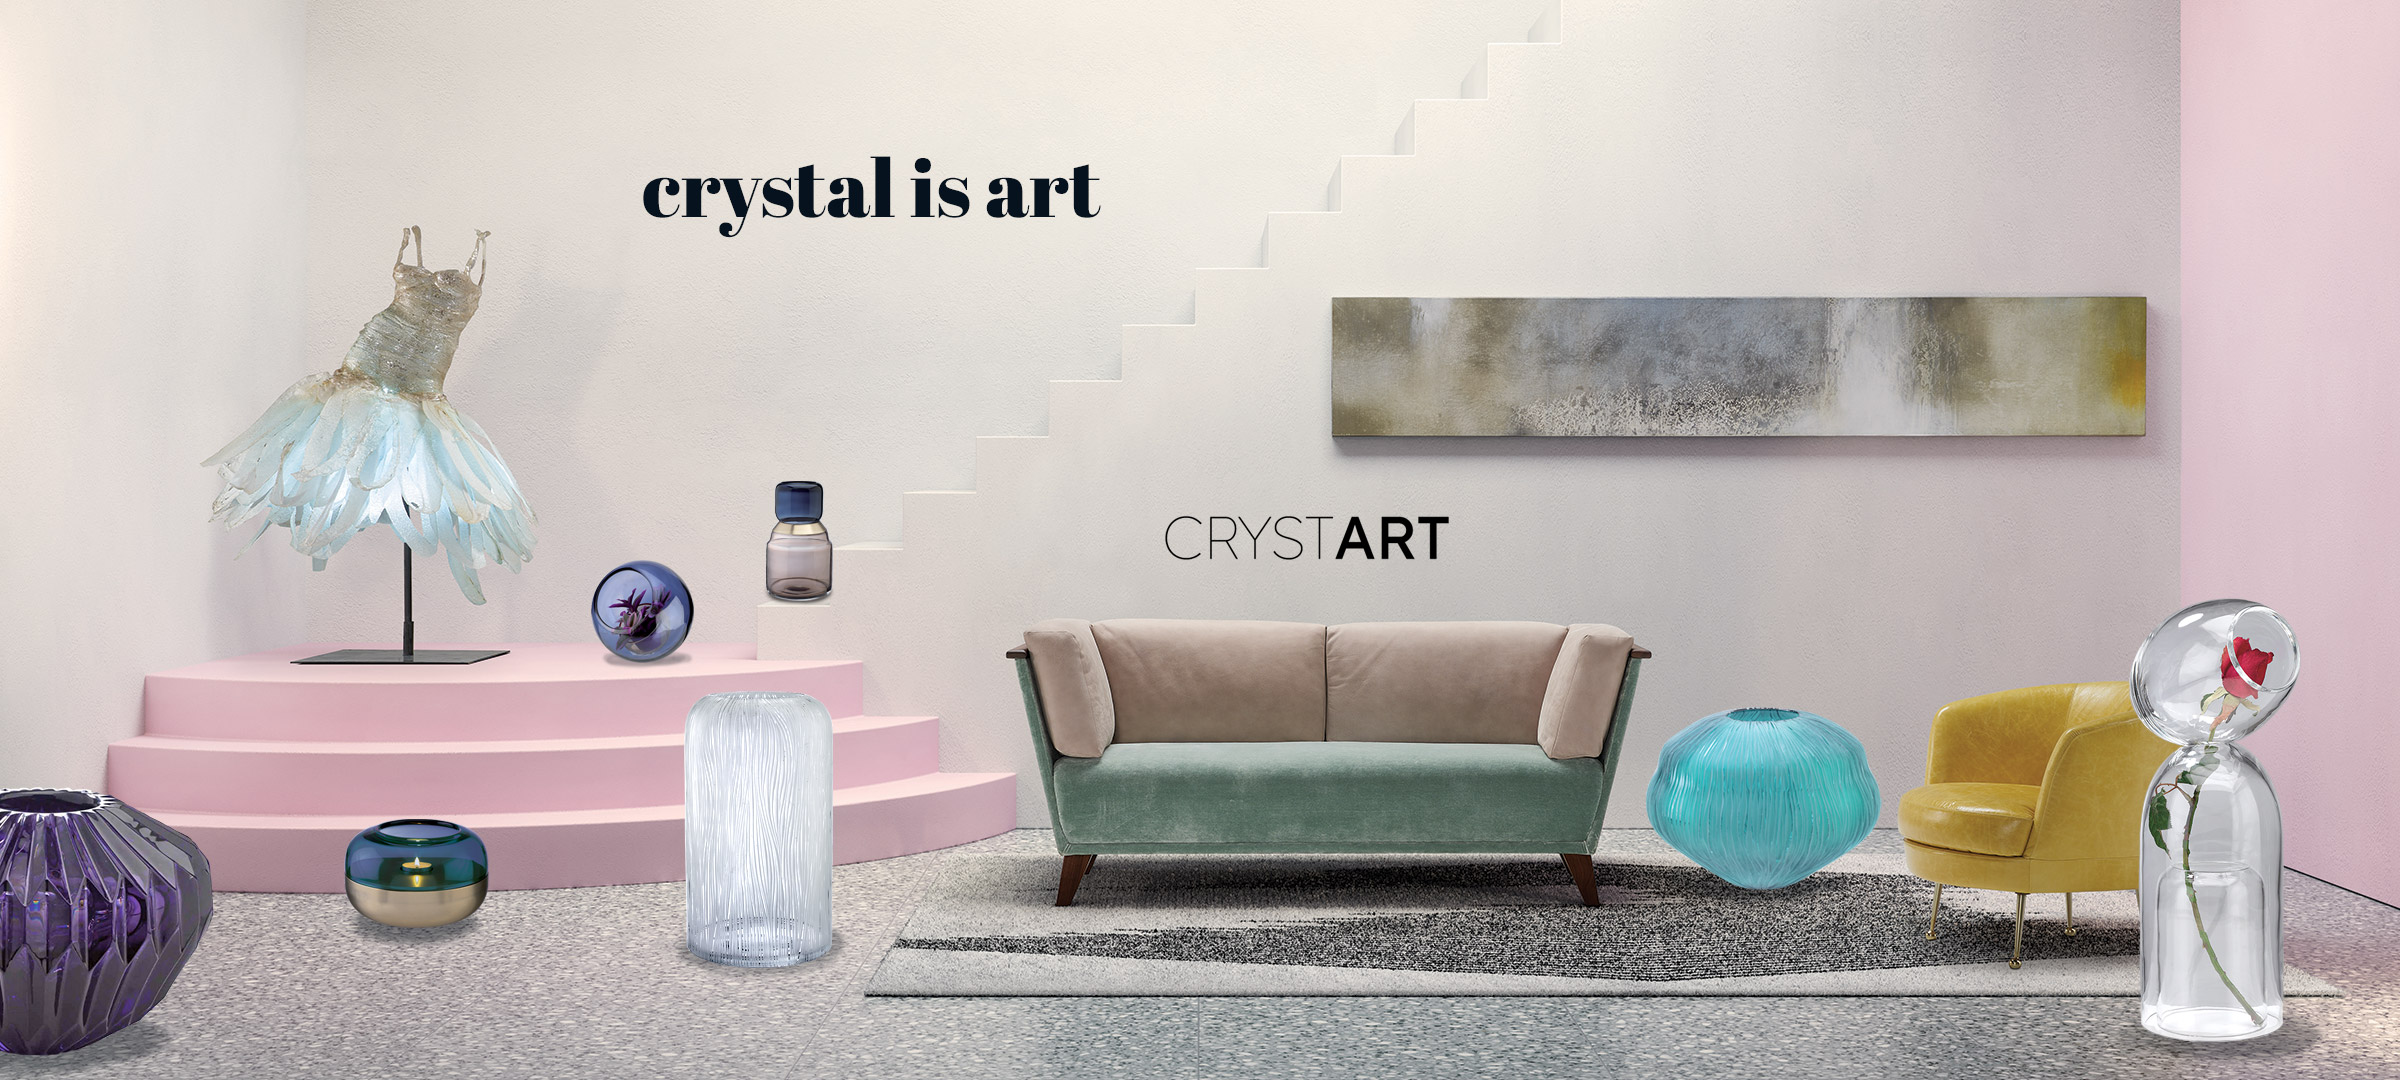 crystart crystal design italy